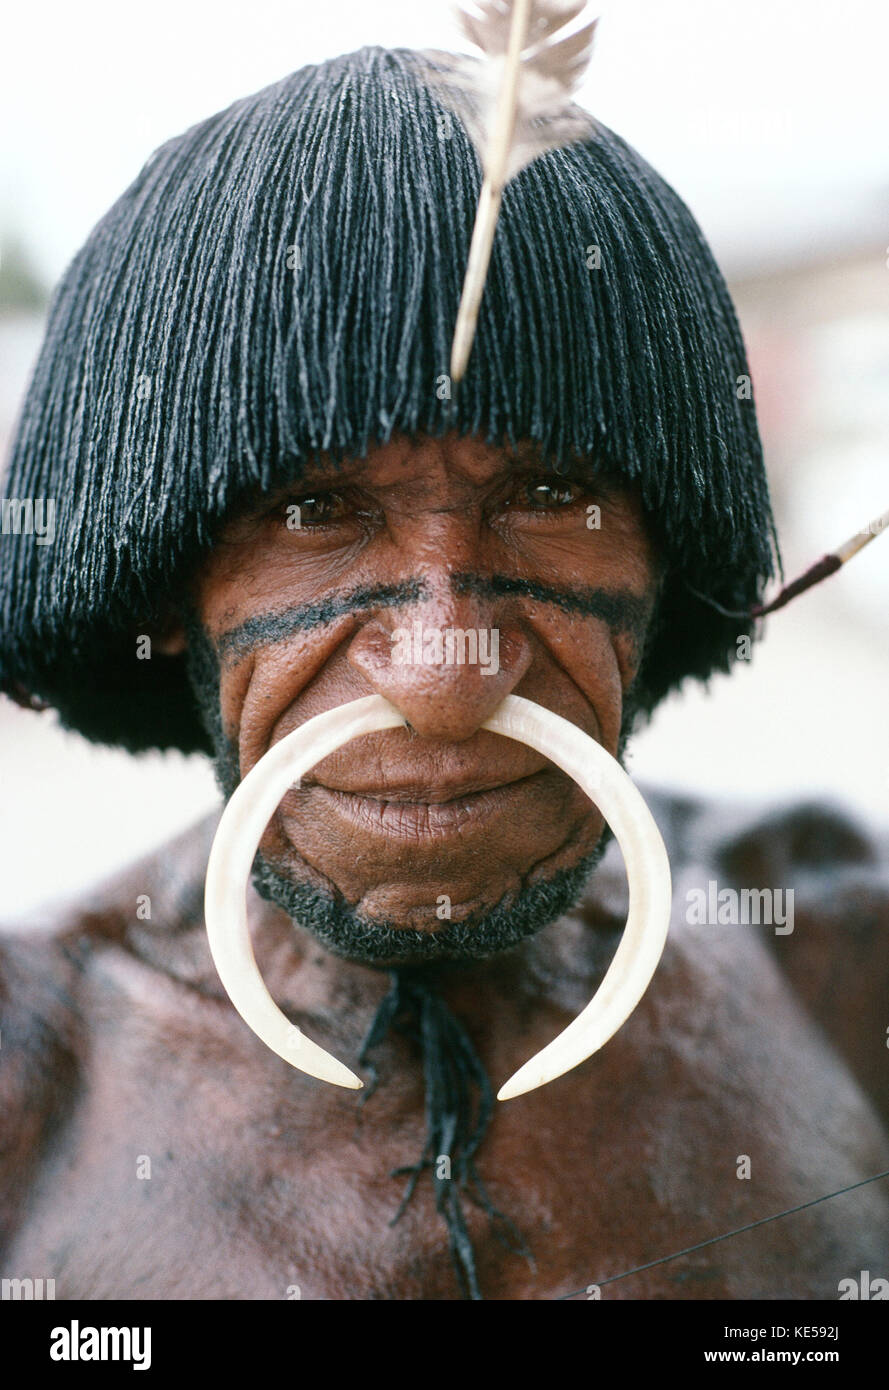 Indonesia. Irian Jaya. Portrait of Dani tribesman. Stock Photo